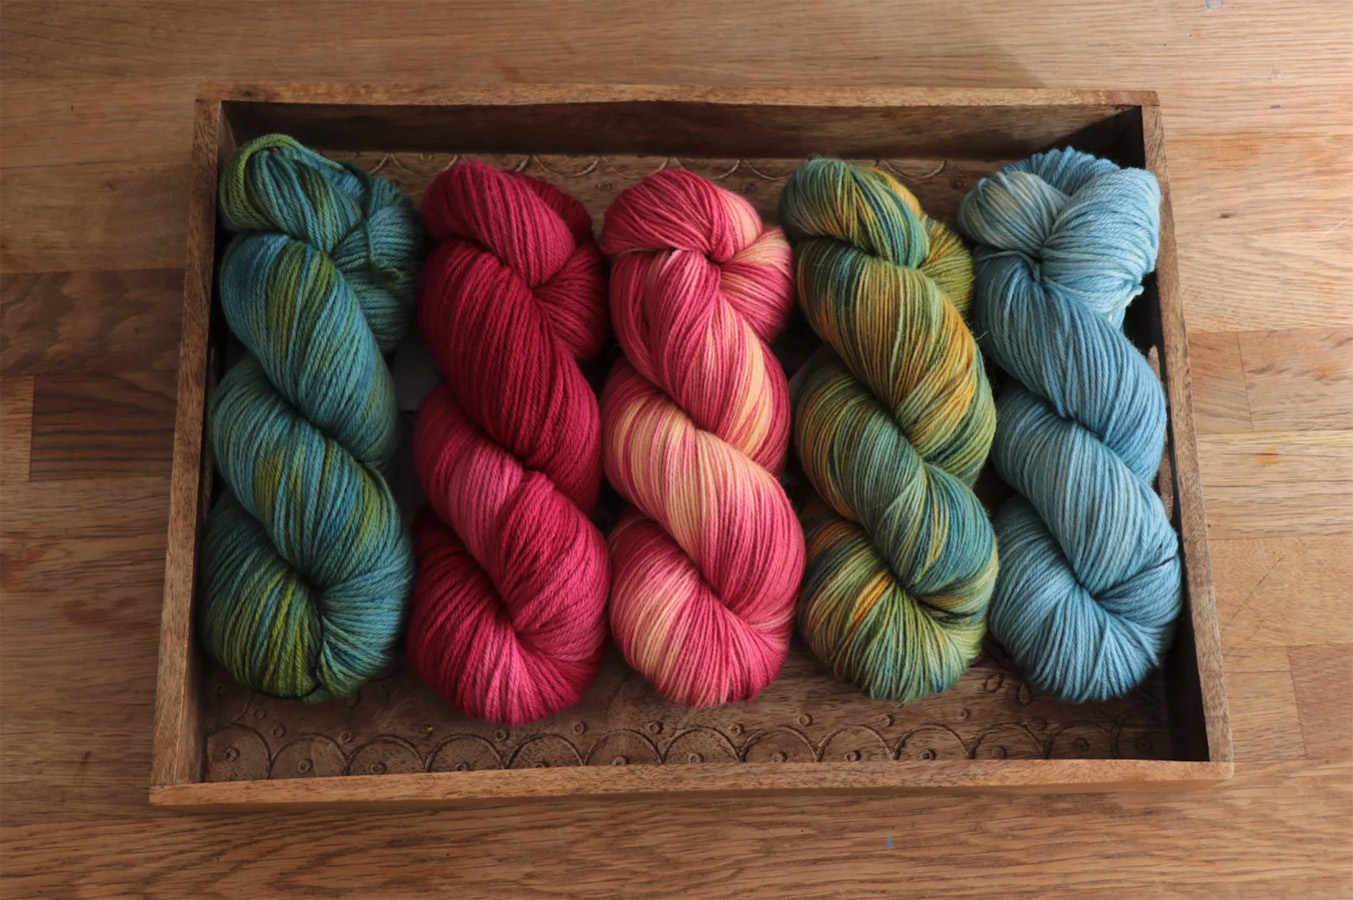 Photo of naturally dyed yarns (courtesy of Dunkelgrun.com via CC license)